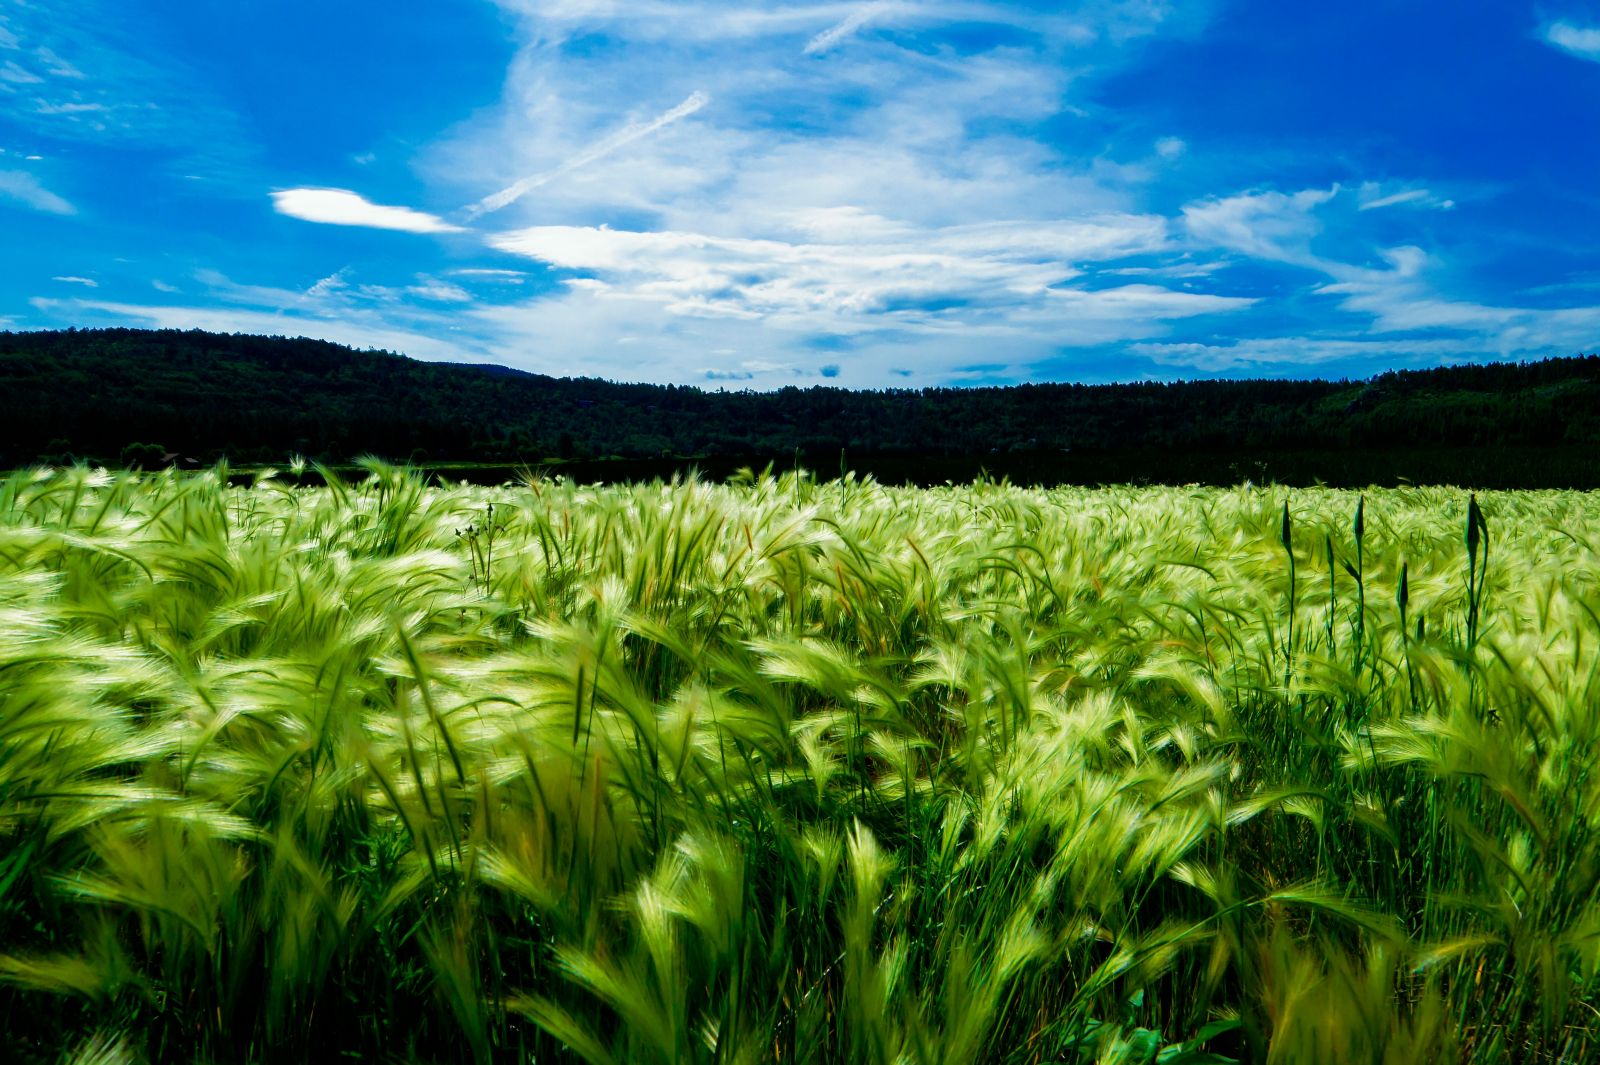 Farming - Grain field under blue cloudy sky by Thomas Pierre via Unsplash